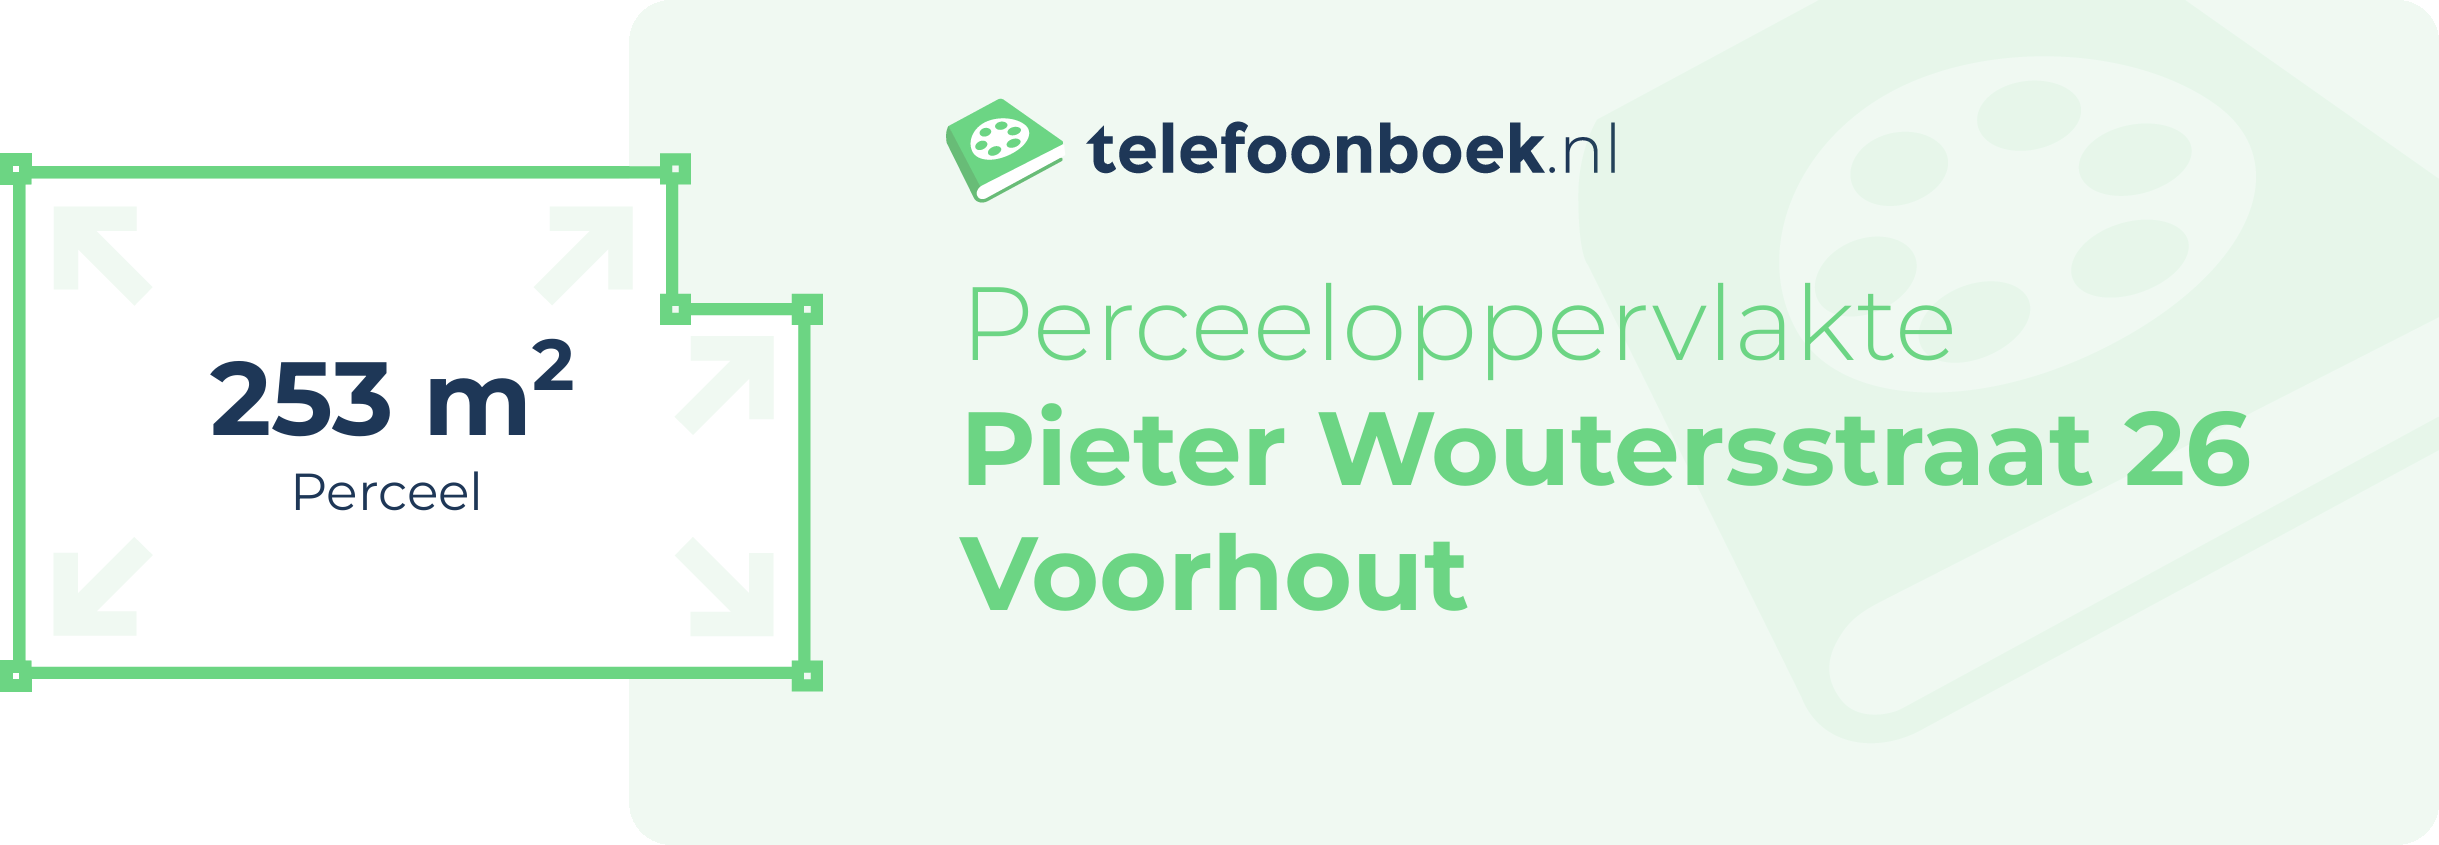 Perceeloppervlakte Pieter Woutersstraat 26 Voorhout